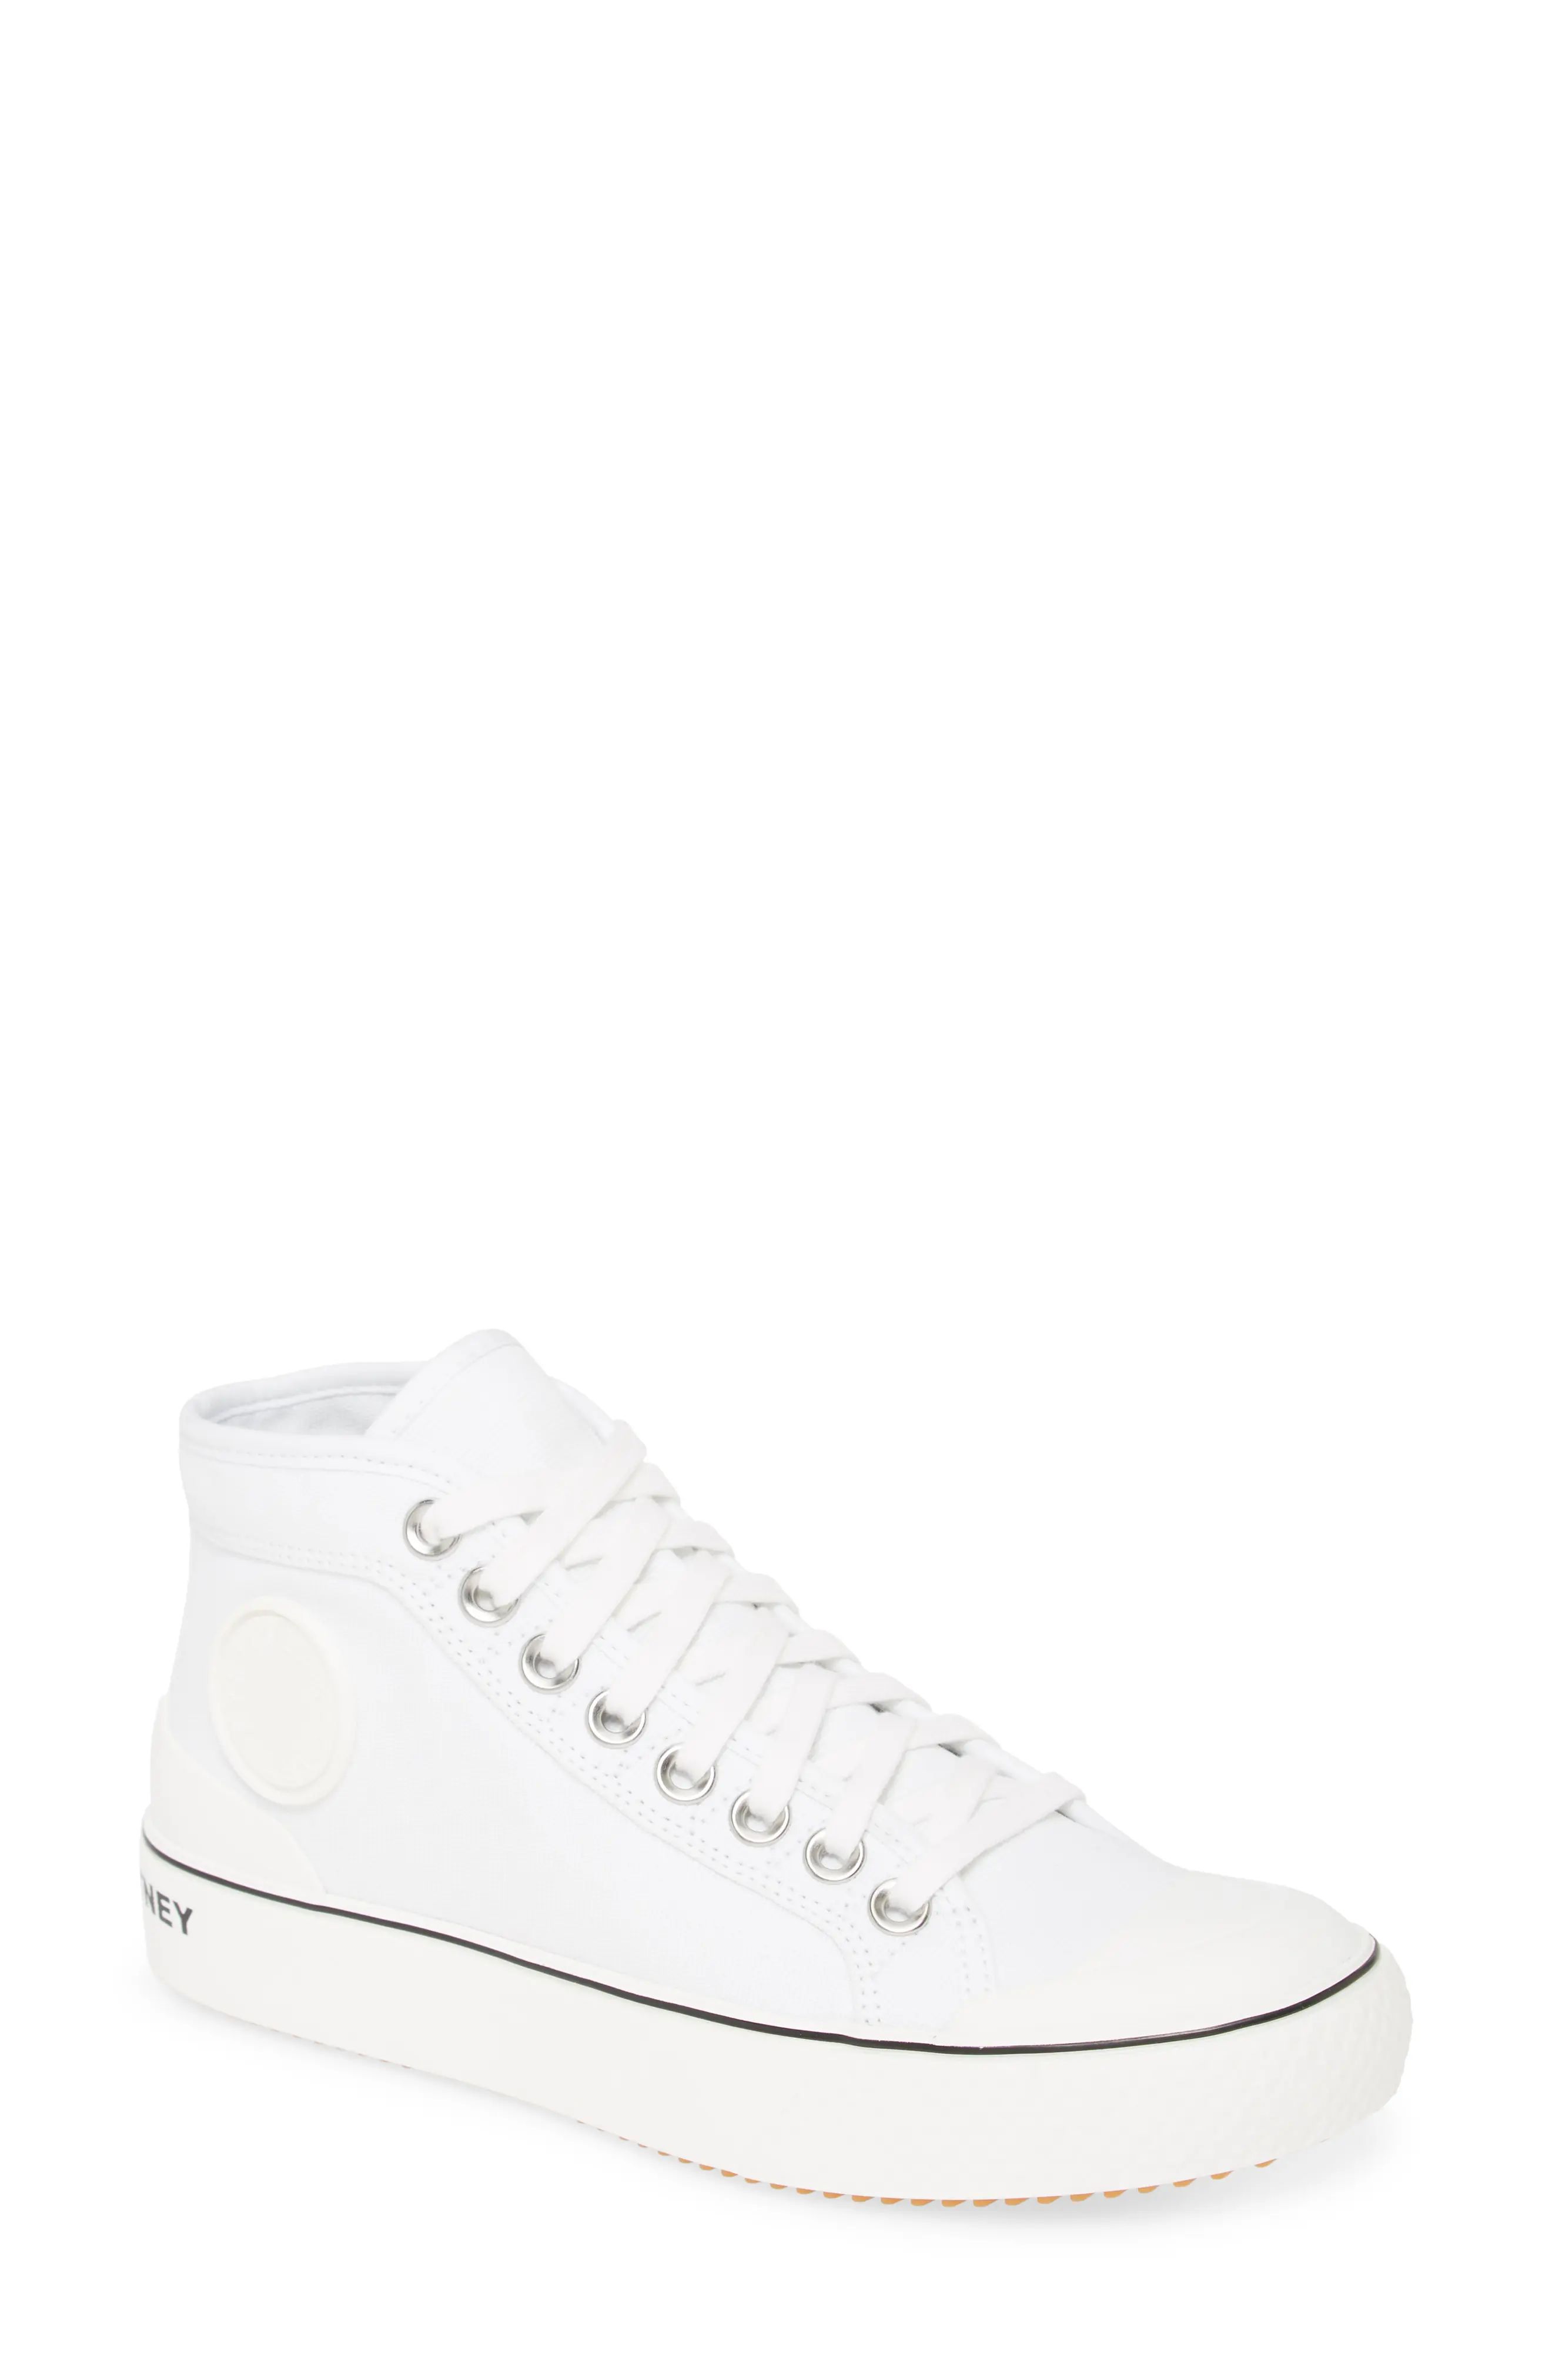 Women's Stella Mccartney High Top Sneaker, Size 8US / 38EU - White | Nordstrom